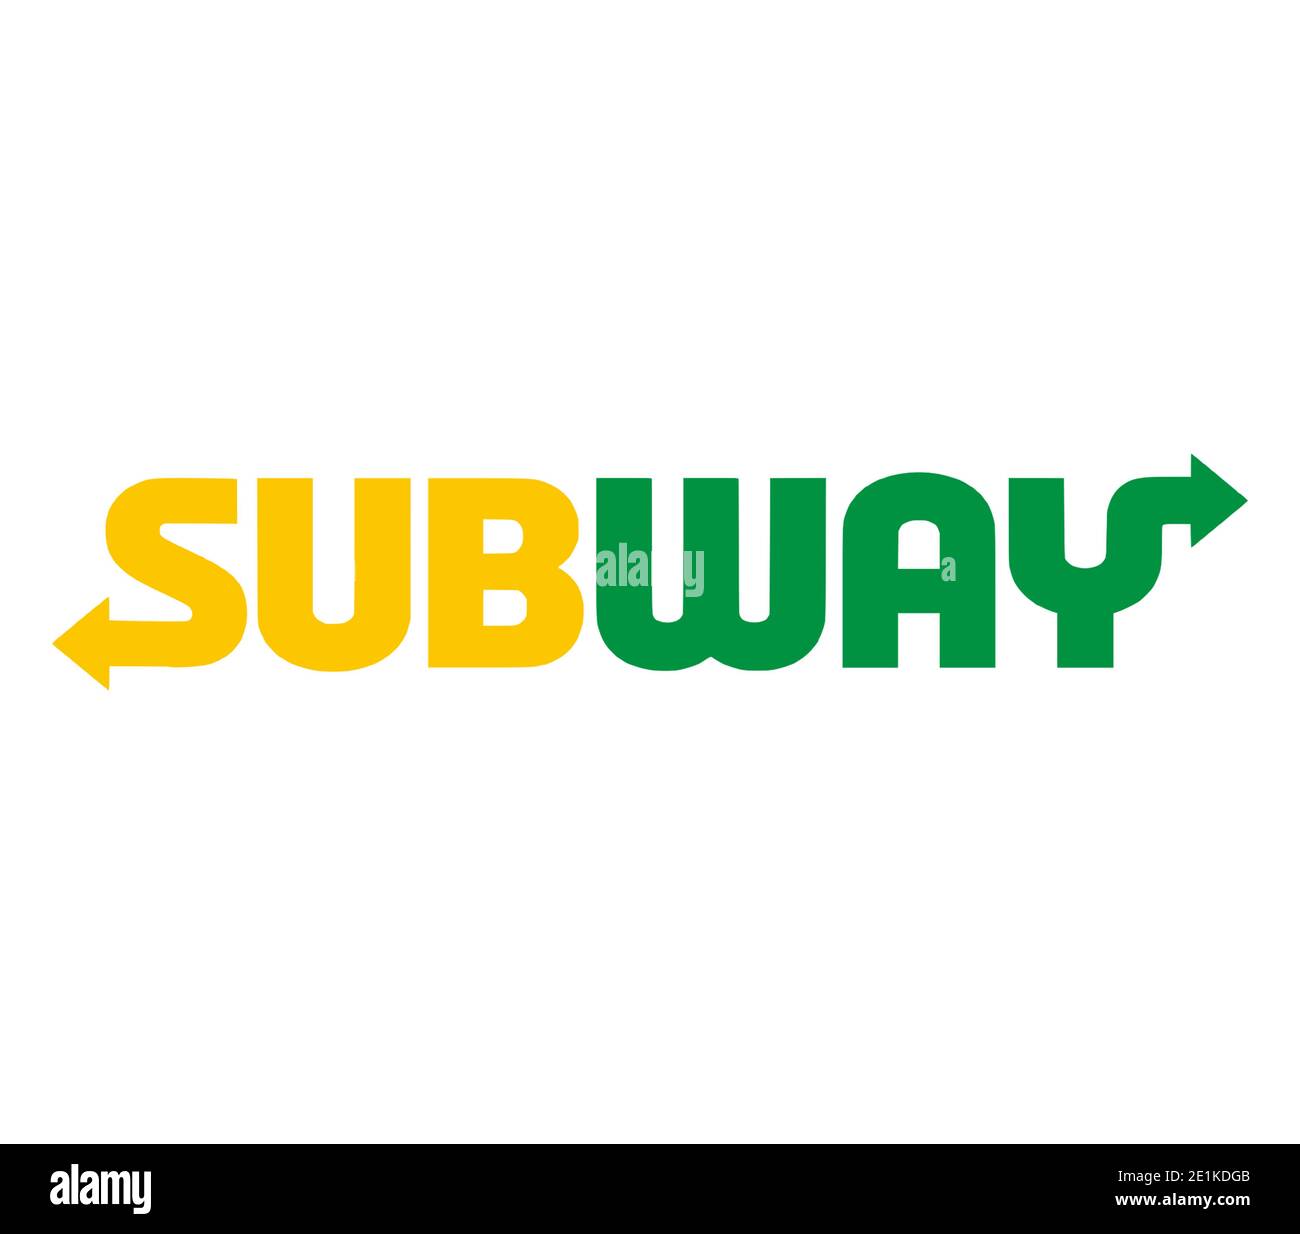 Subway restaurant logo Stock Photo